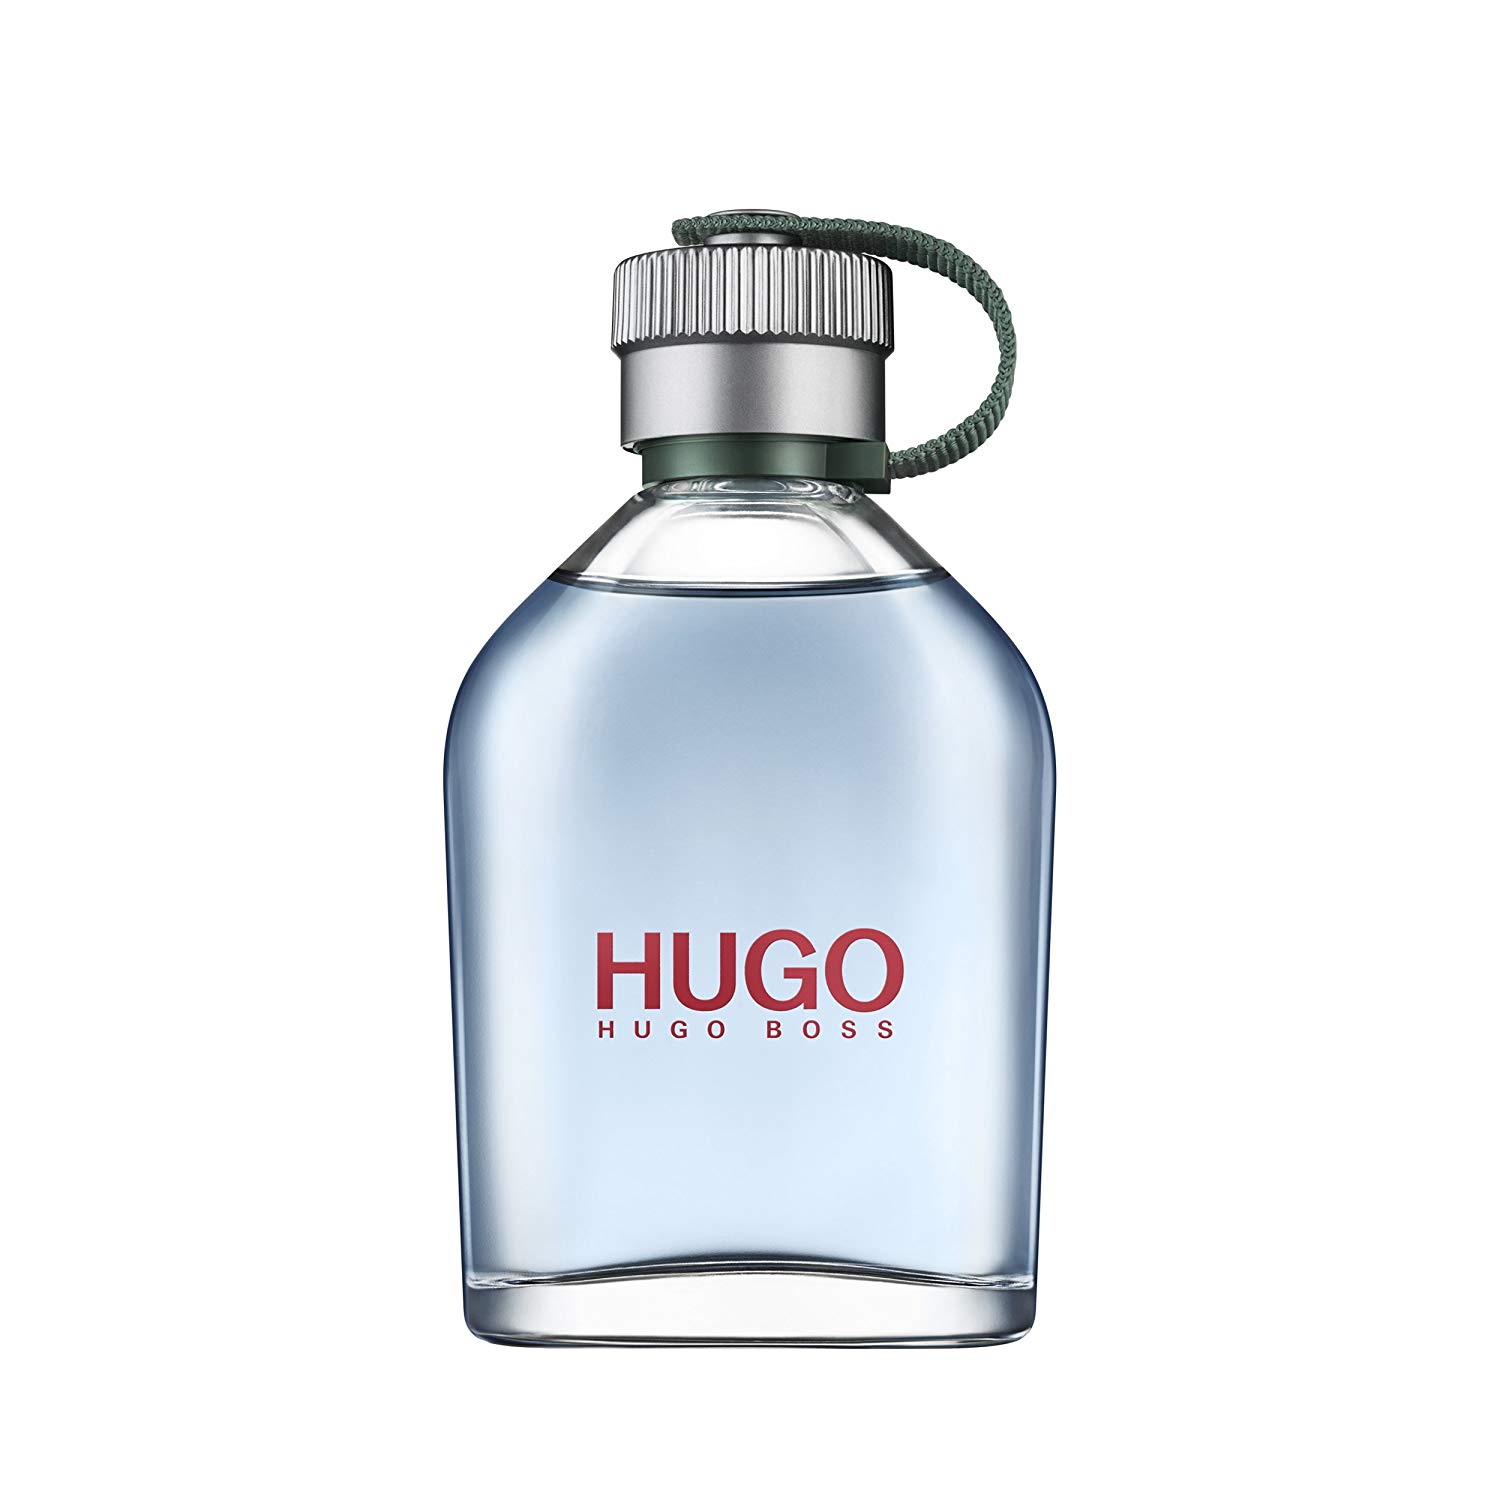 HUGO BOSS MAN (GREEN) EDT 125ML - Perfume in Bangladesh